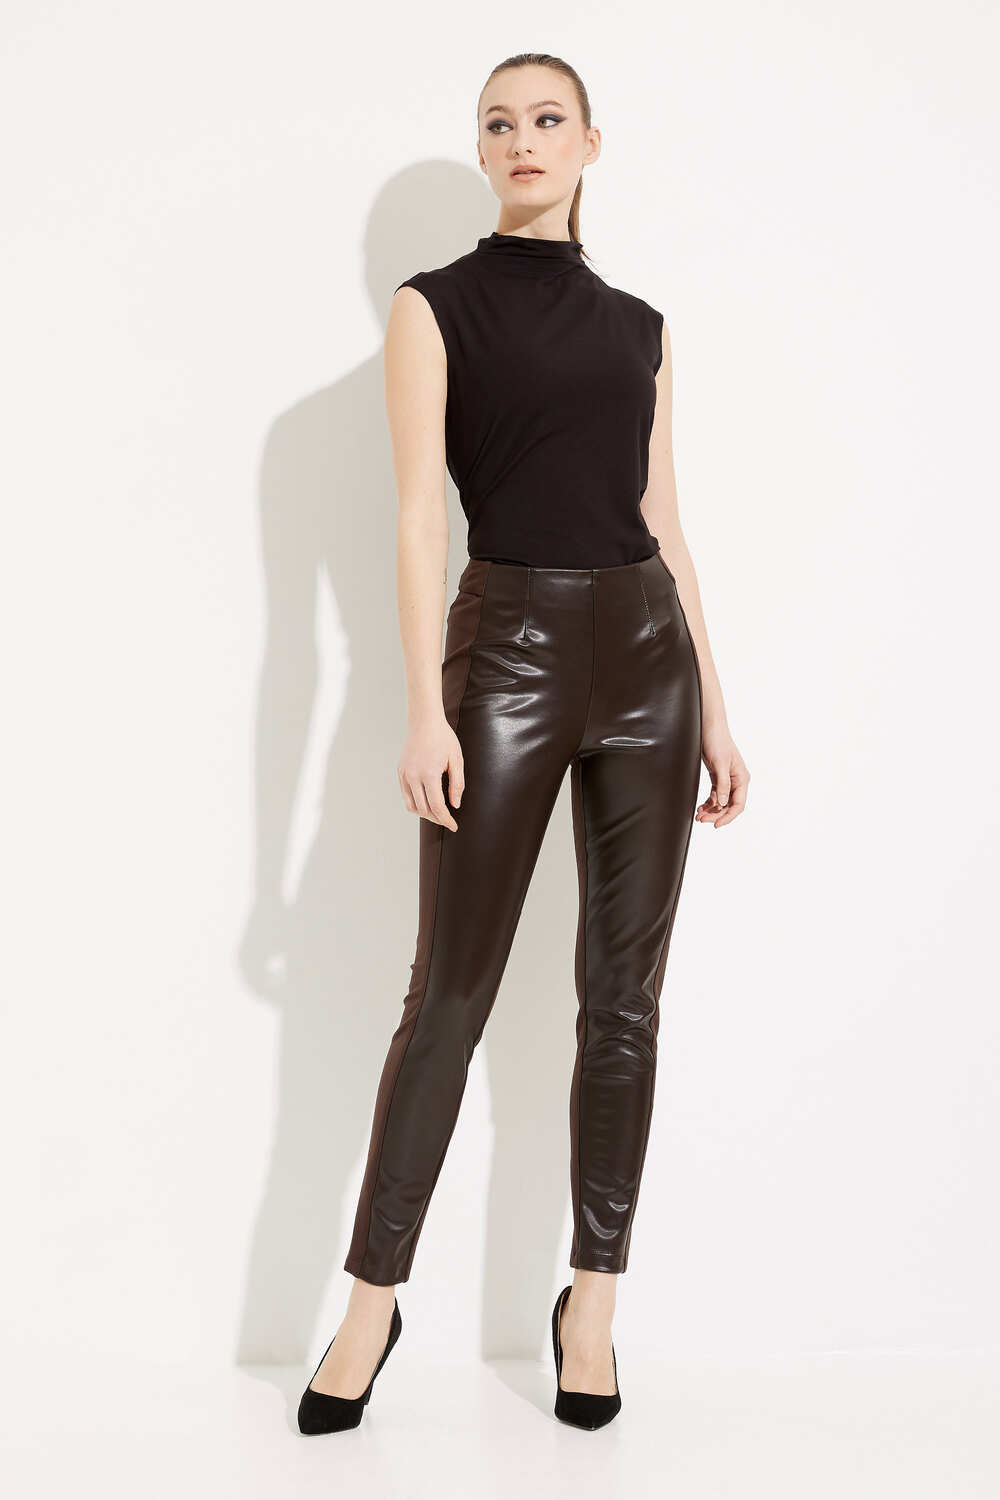 Joseph Ribkoff Faux Leather Pants Style 224055. Mocha